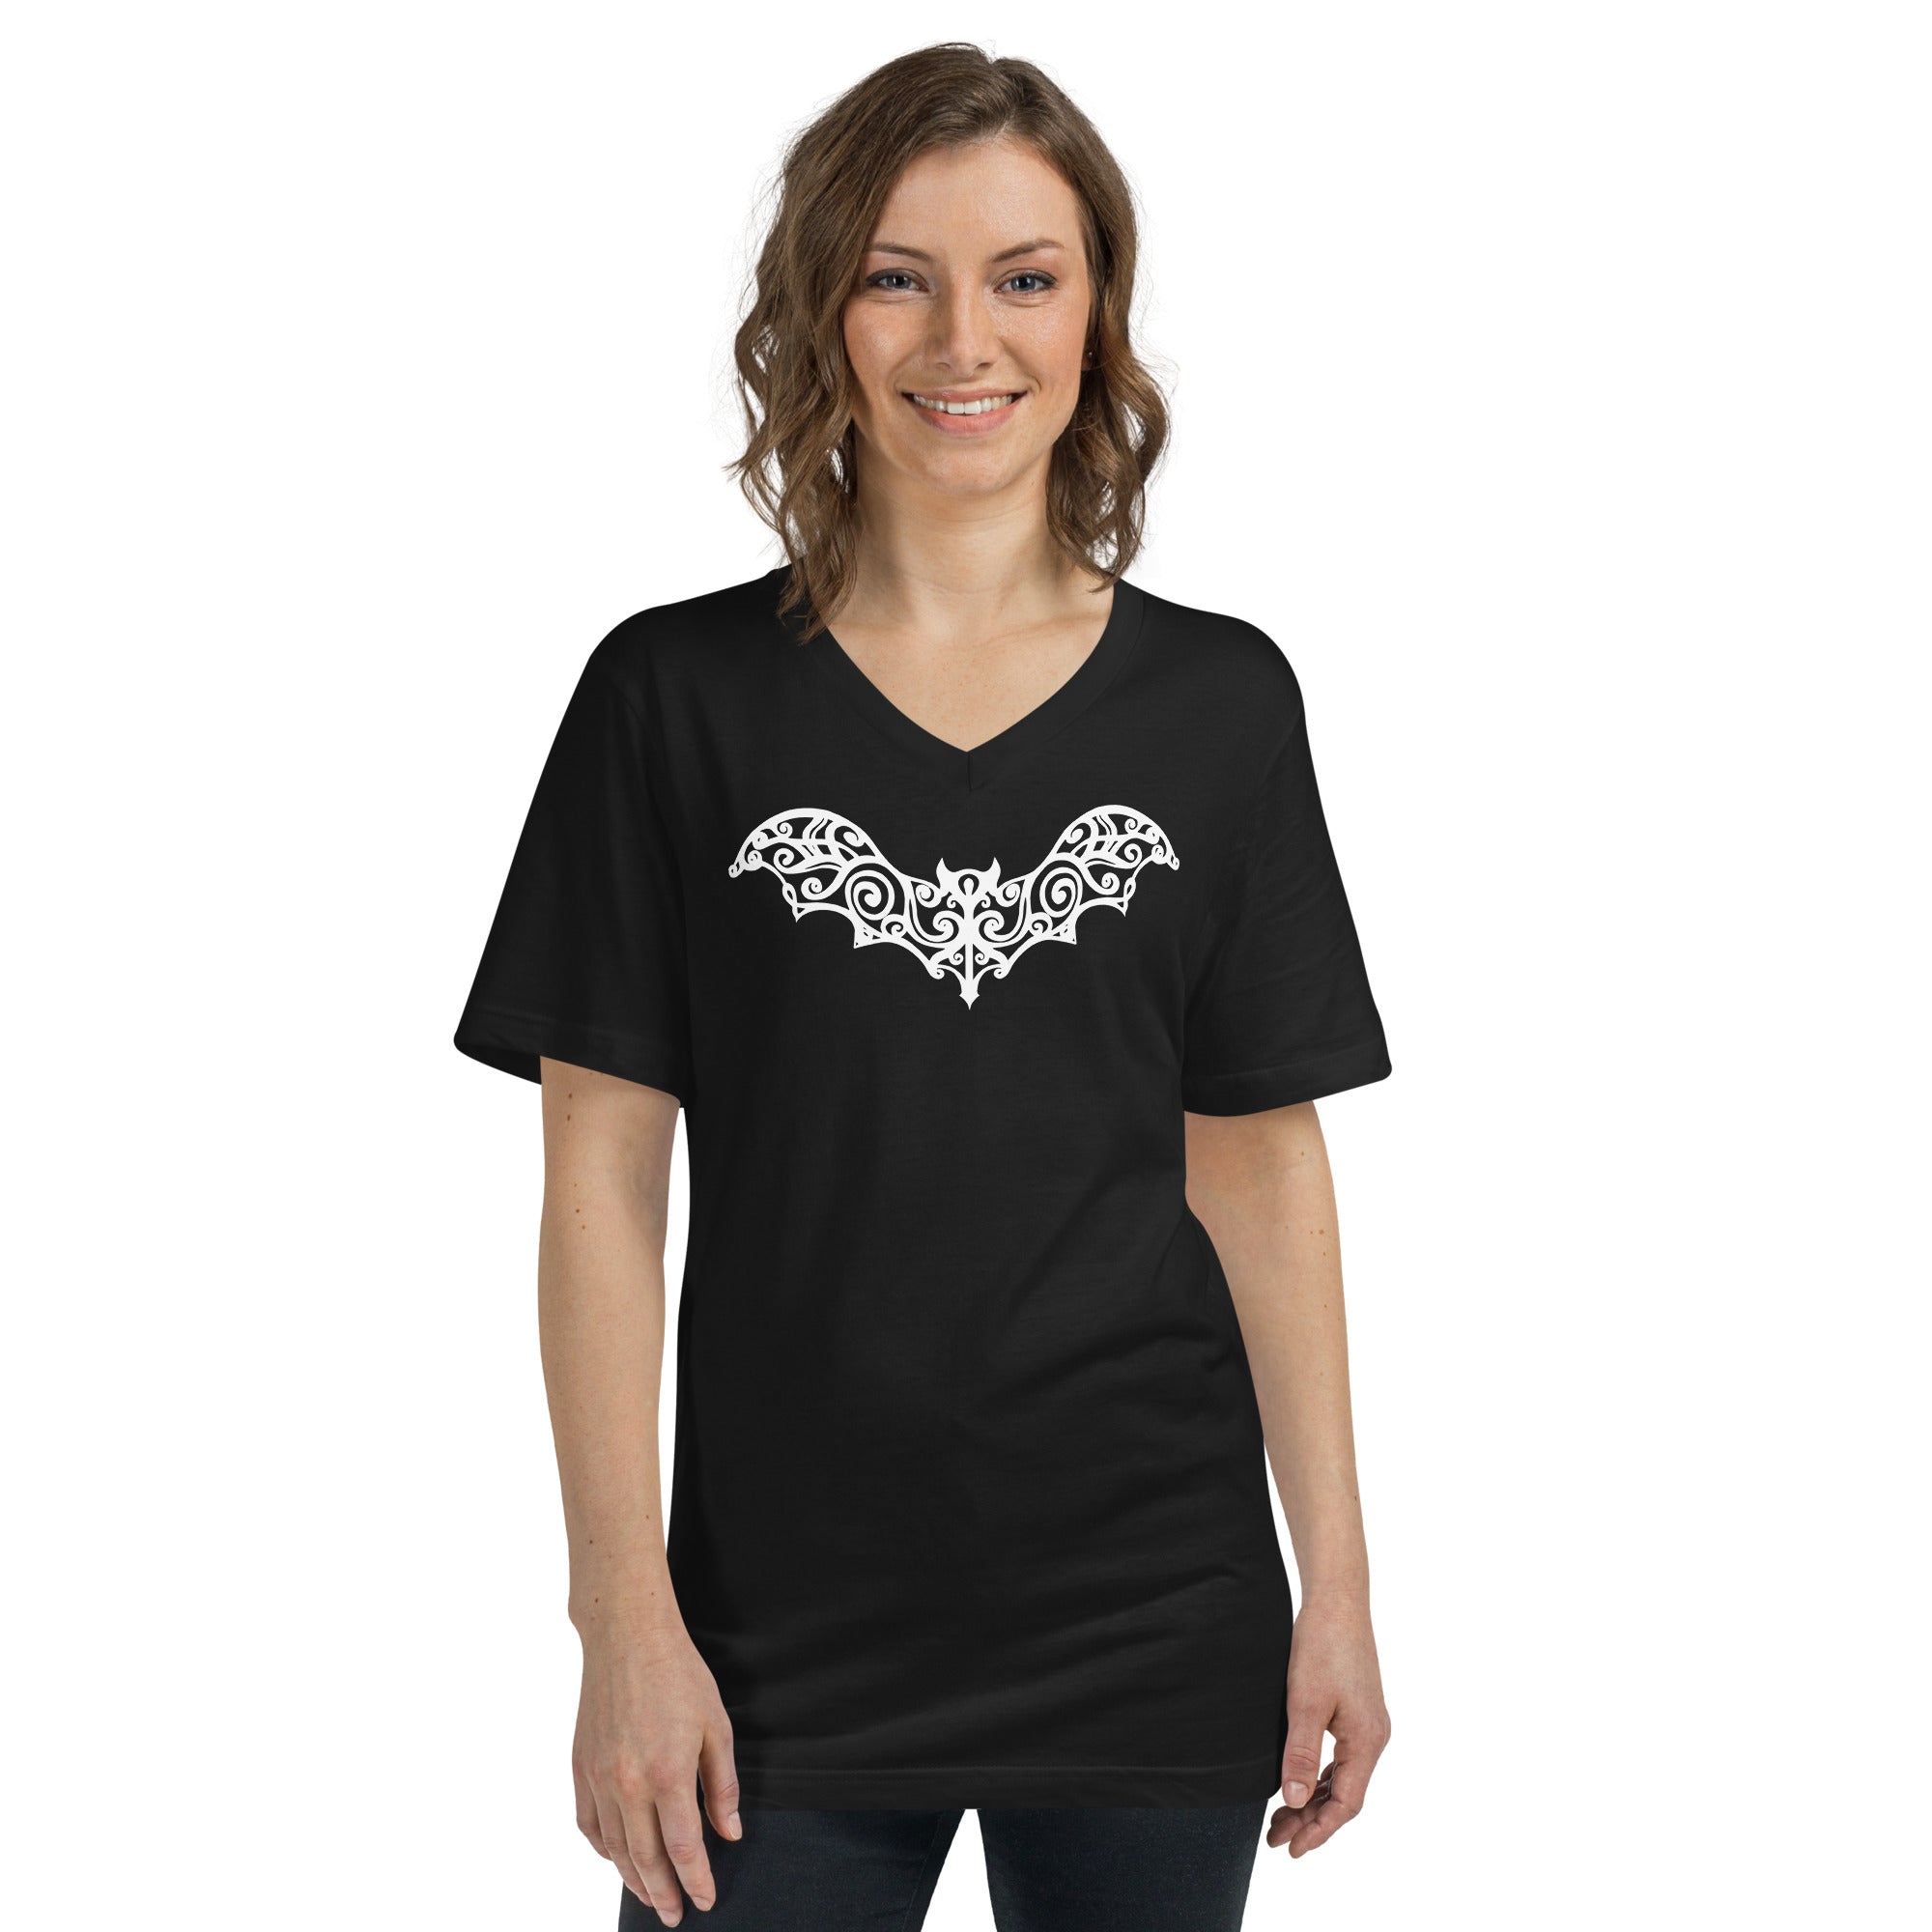 Gothic Wrought Iron Style Vine Bat Women’s Short Sleeve V-Neck T-Shirt White Print - Edge of Life Designs